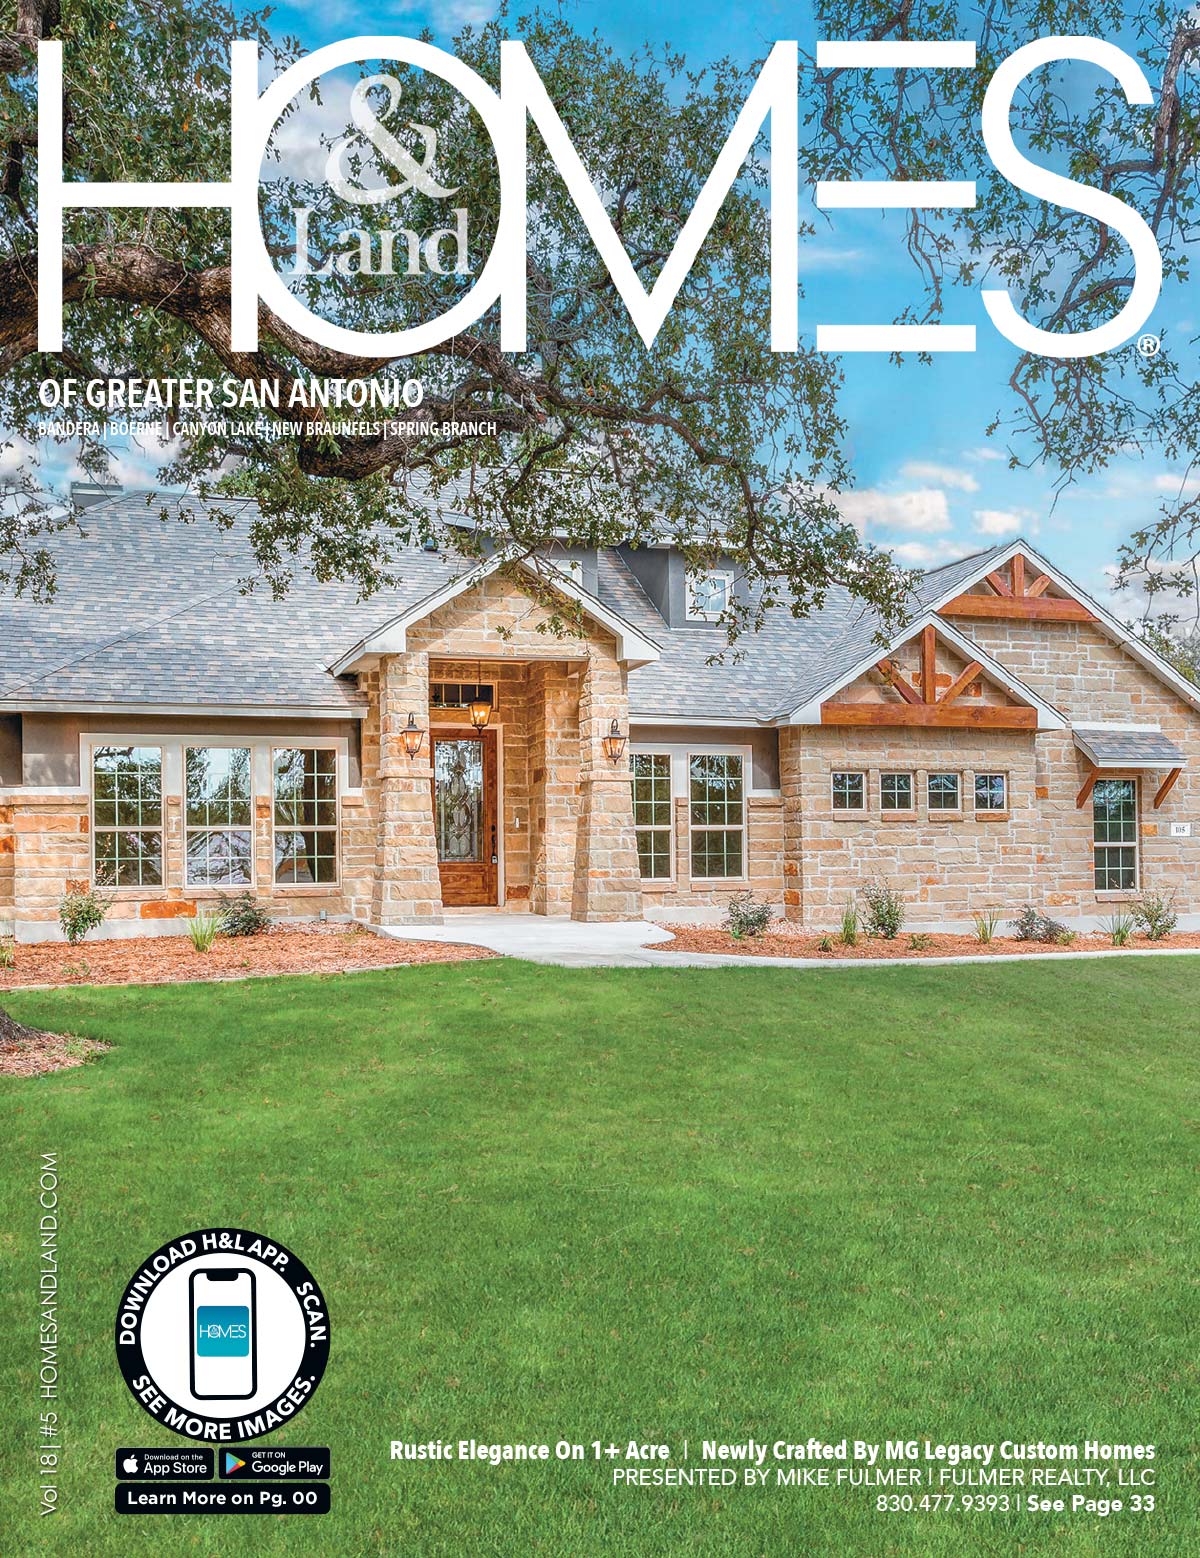 Homes & Land Magazine Cover